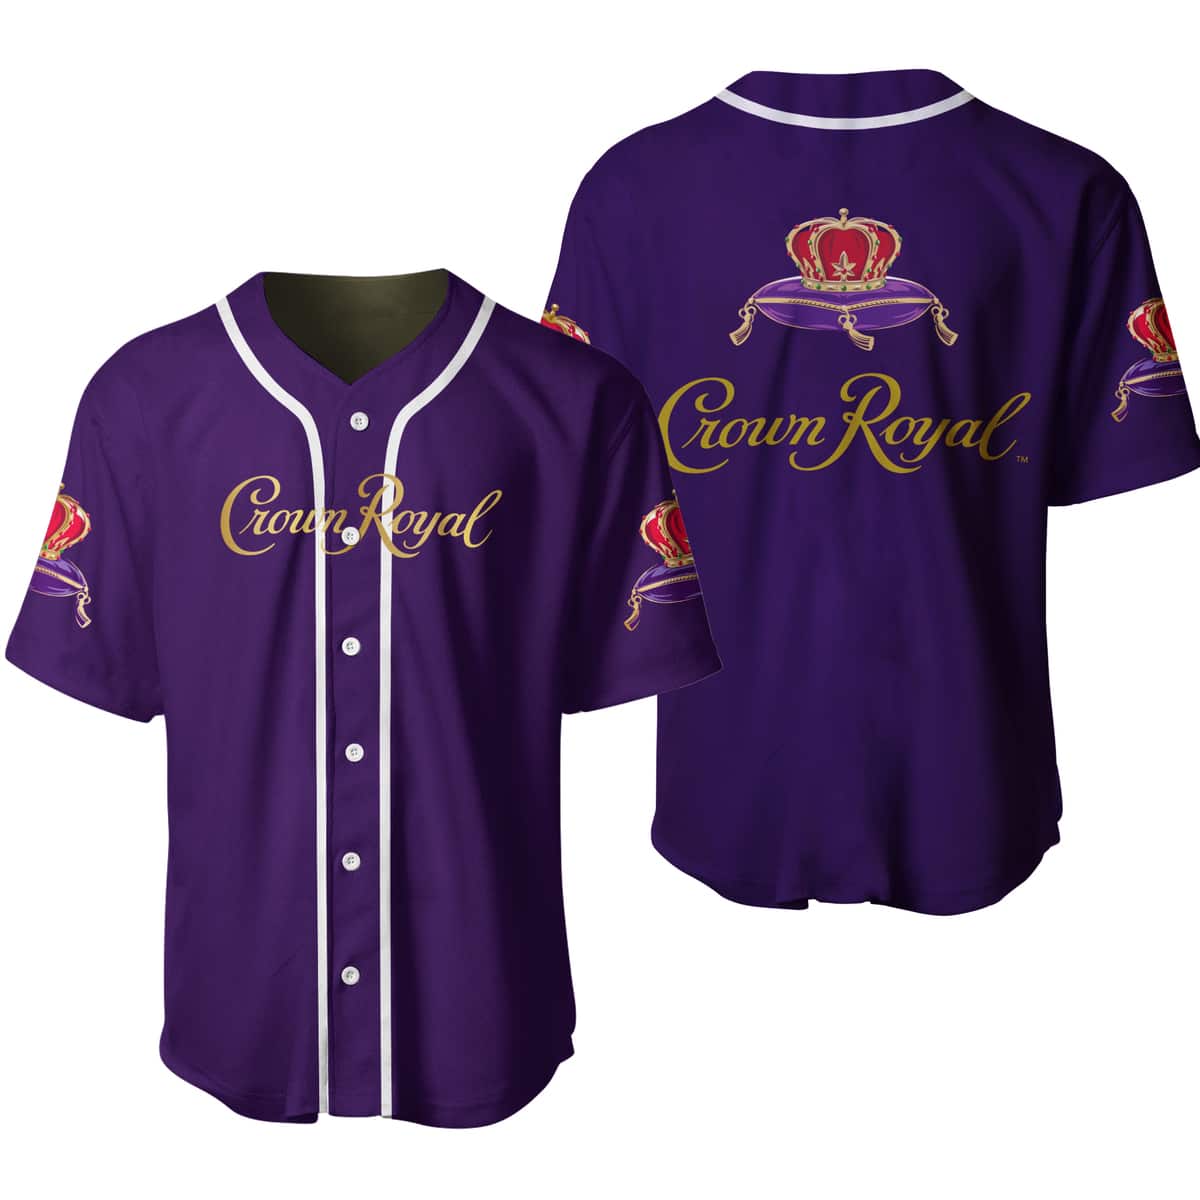 Basic Crown Royal Baseball Jersey Gift For Sport Lovers